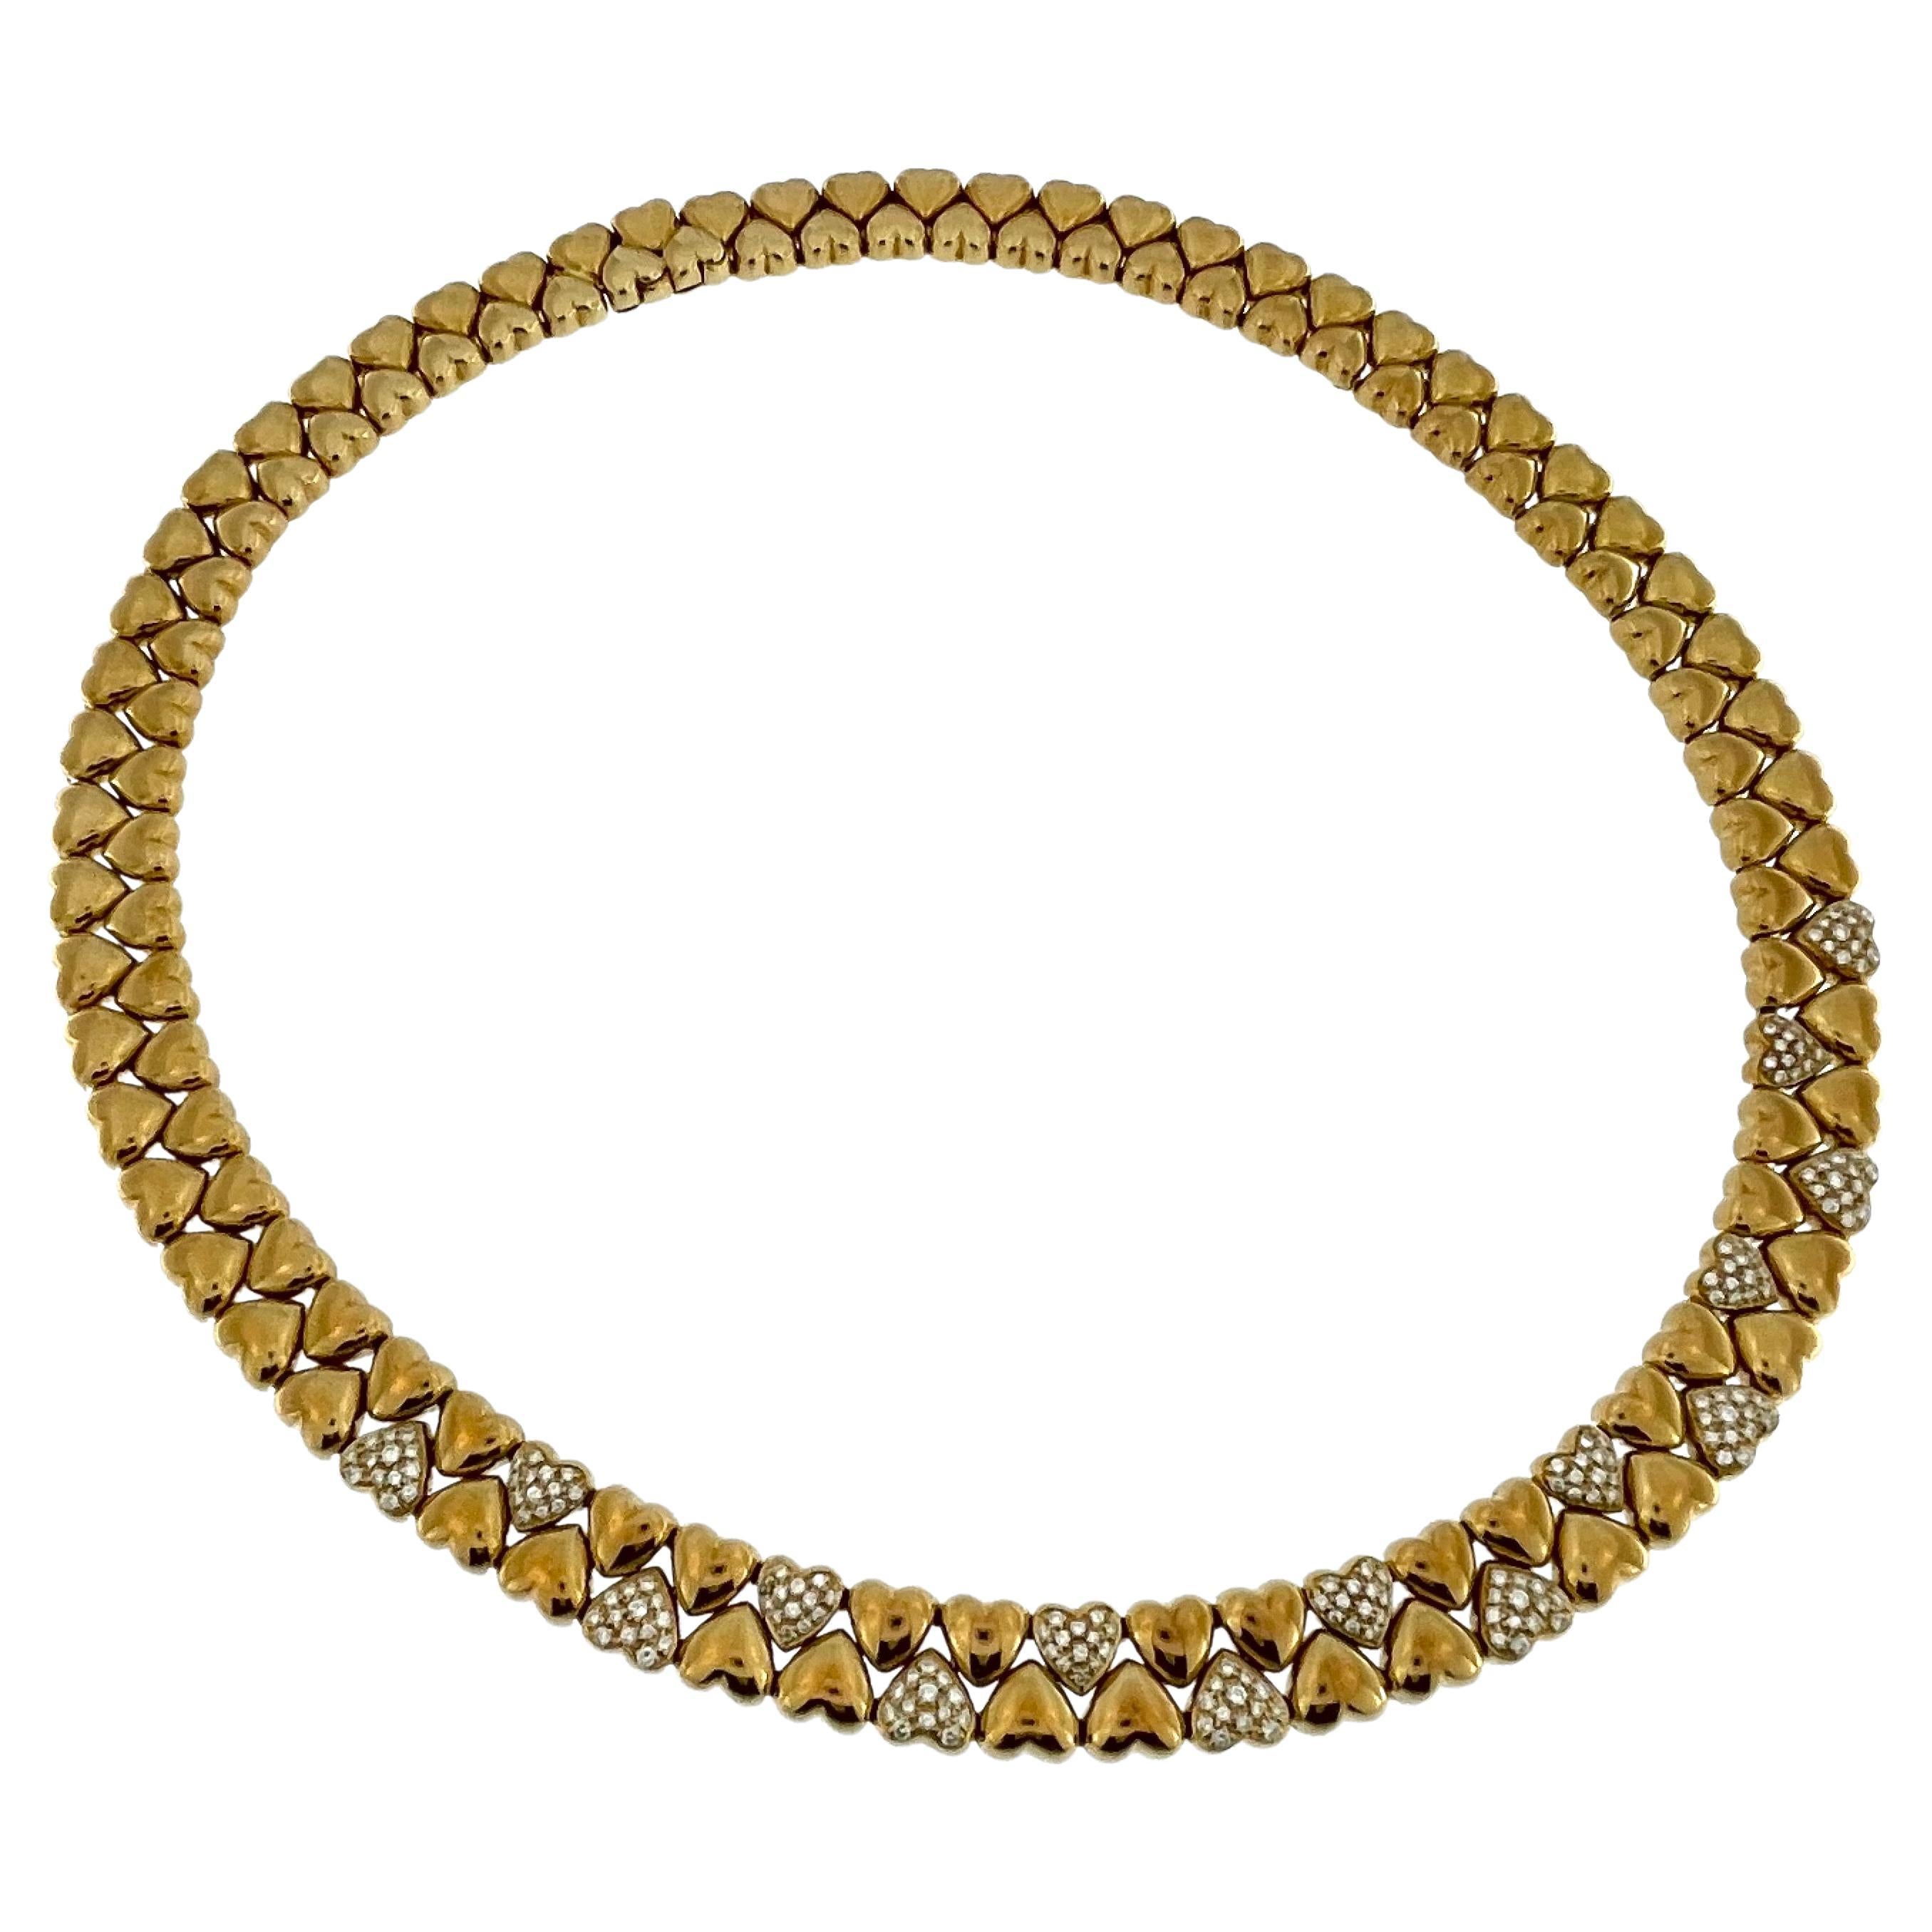 Cartier "Double Heart" Diamonds Necklace 18kt Yellow Gold